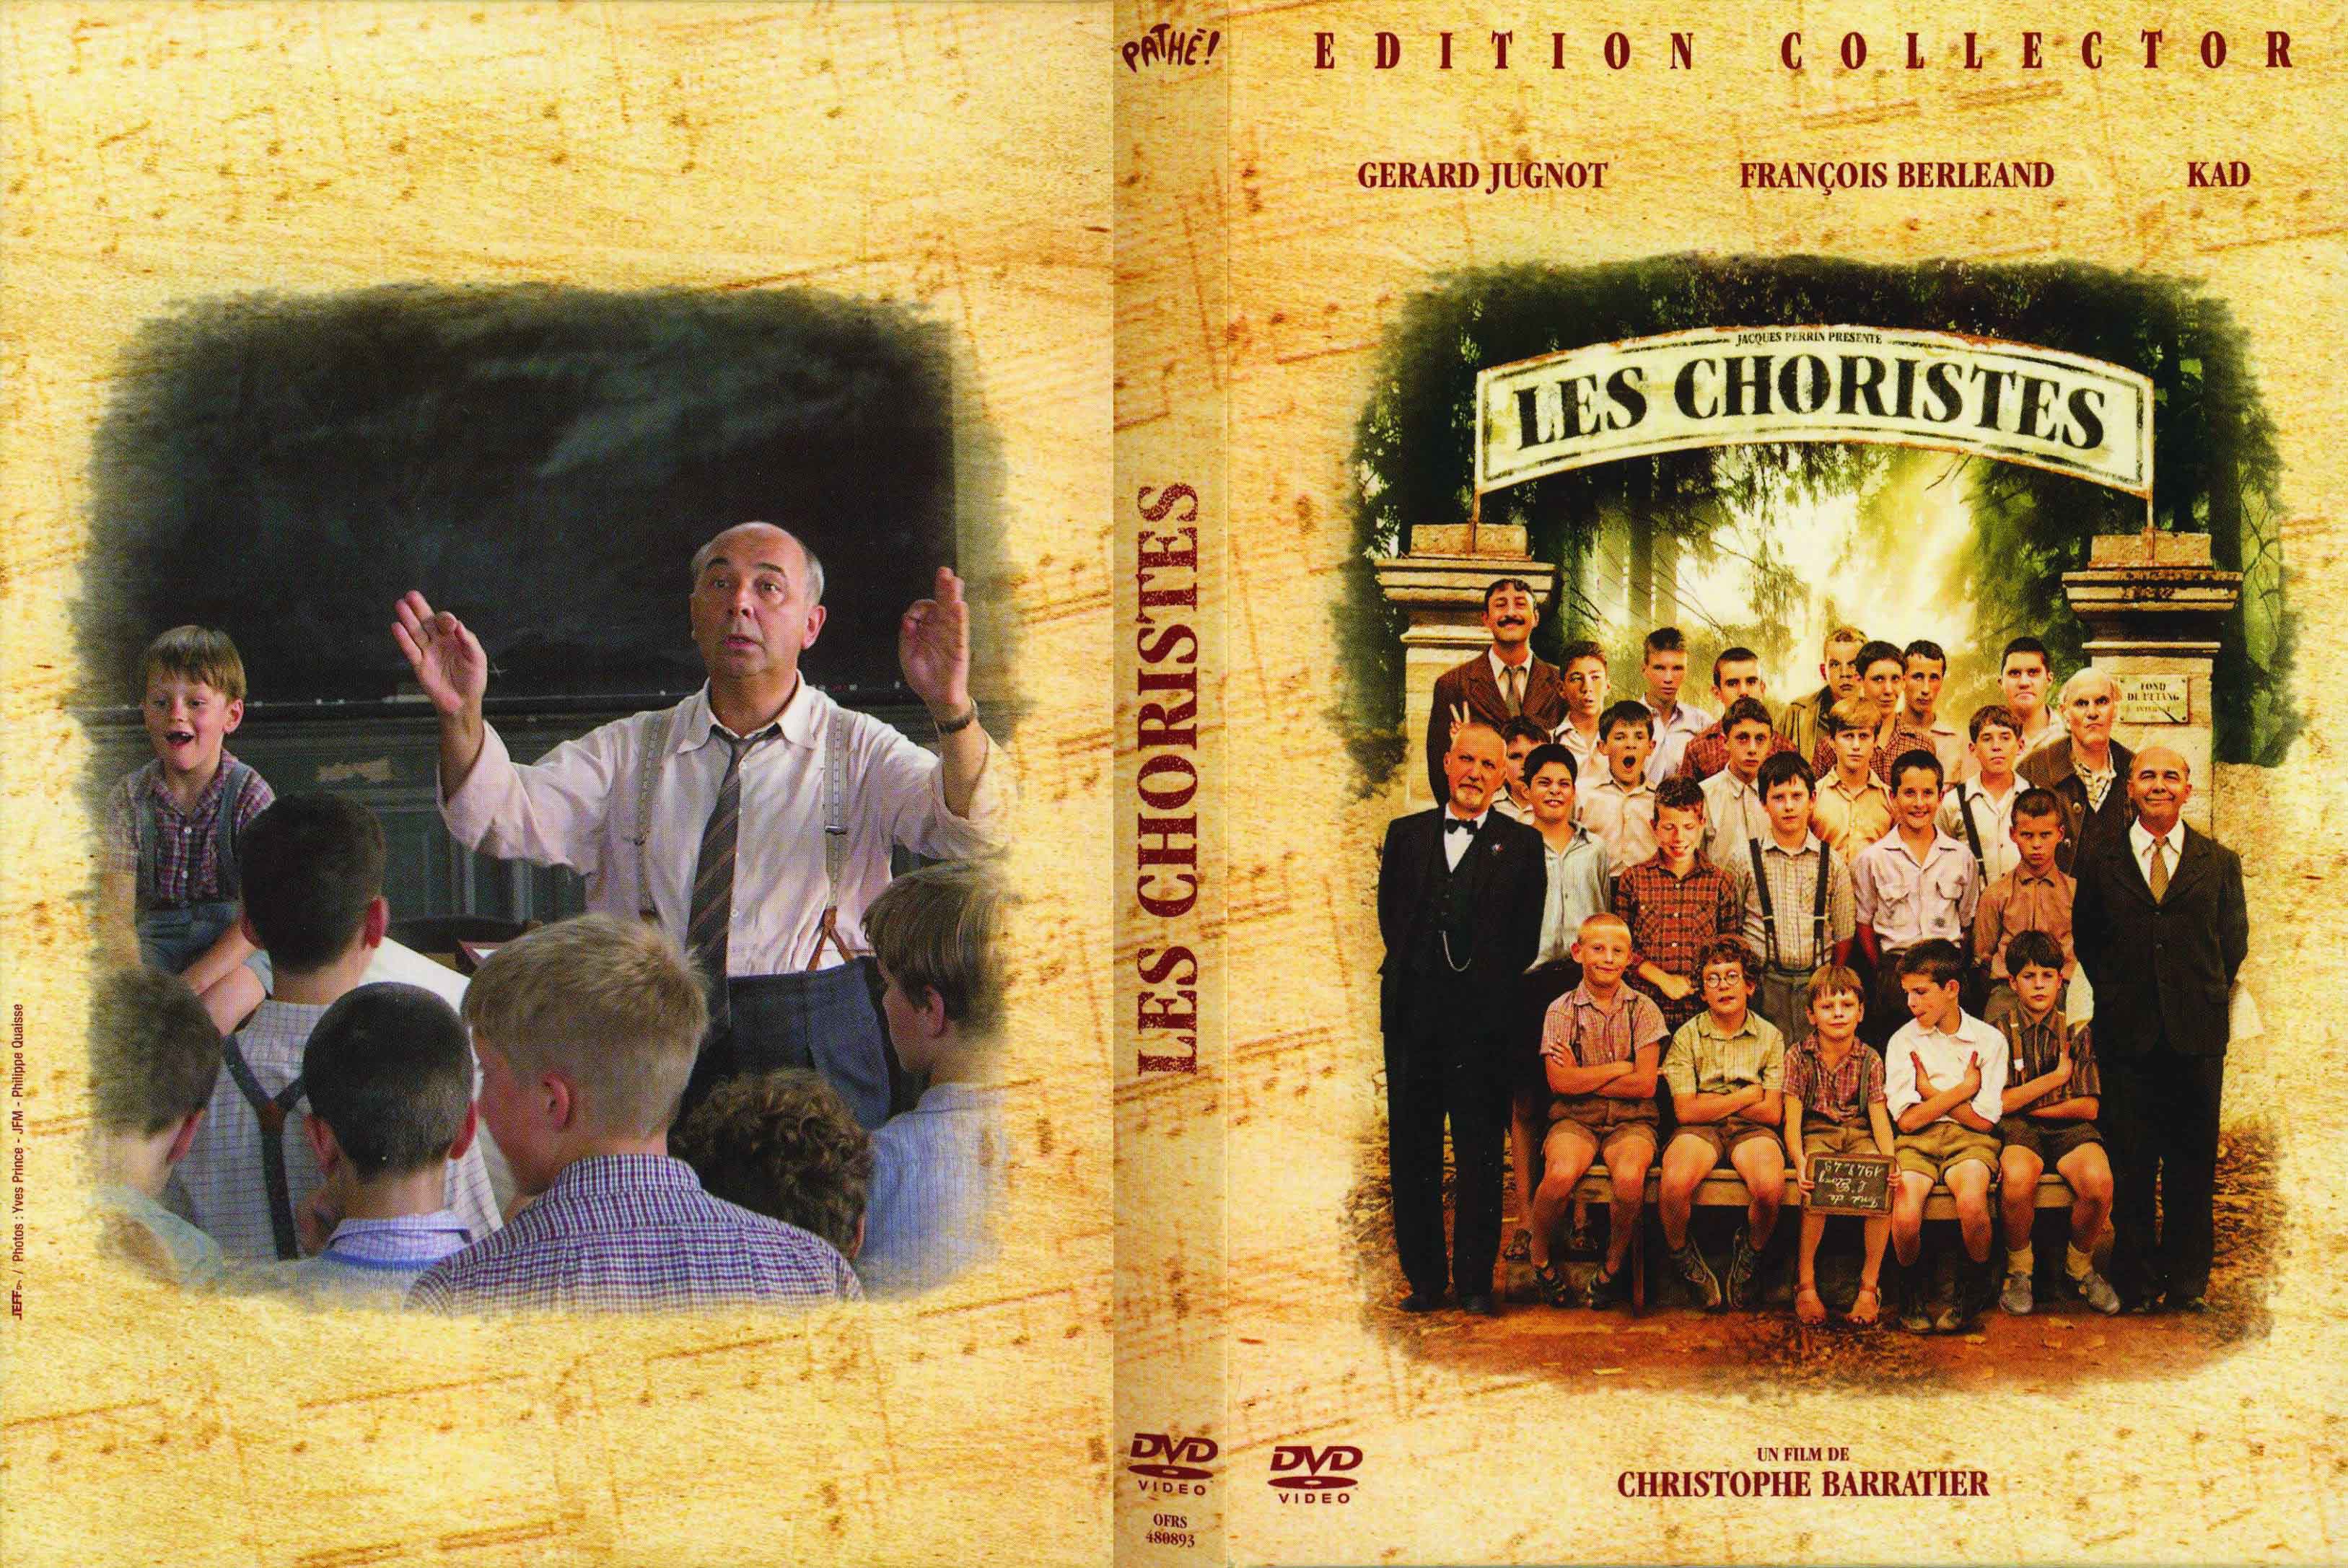 Jaquette DVD Les choristes v2